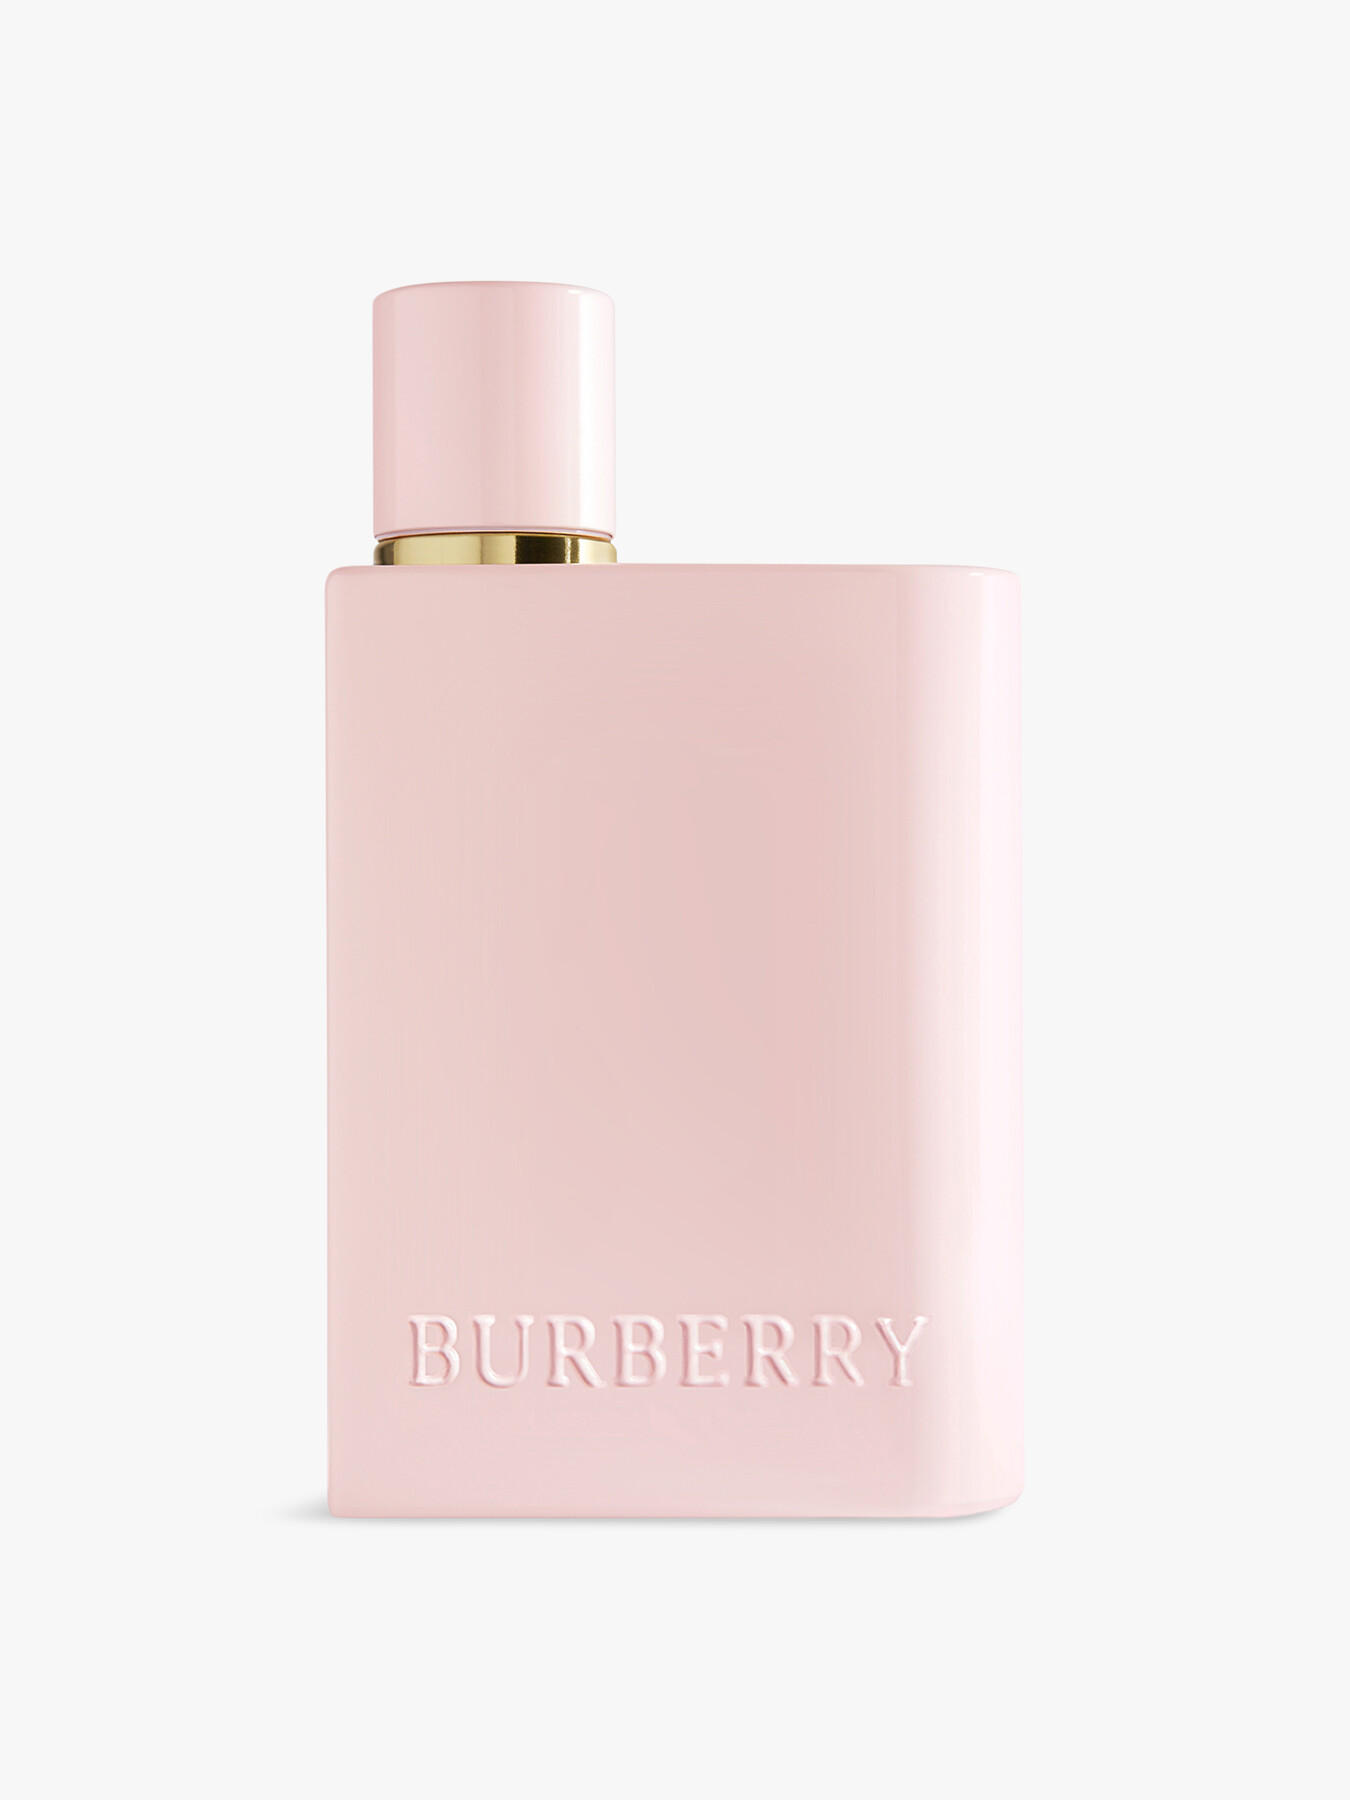 BURBERRY Burberry Her Elixir Eau De Parfum 100ml | Women's Fragrances |  Fenwick